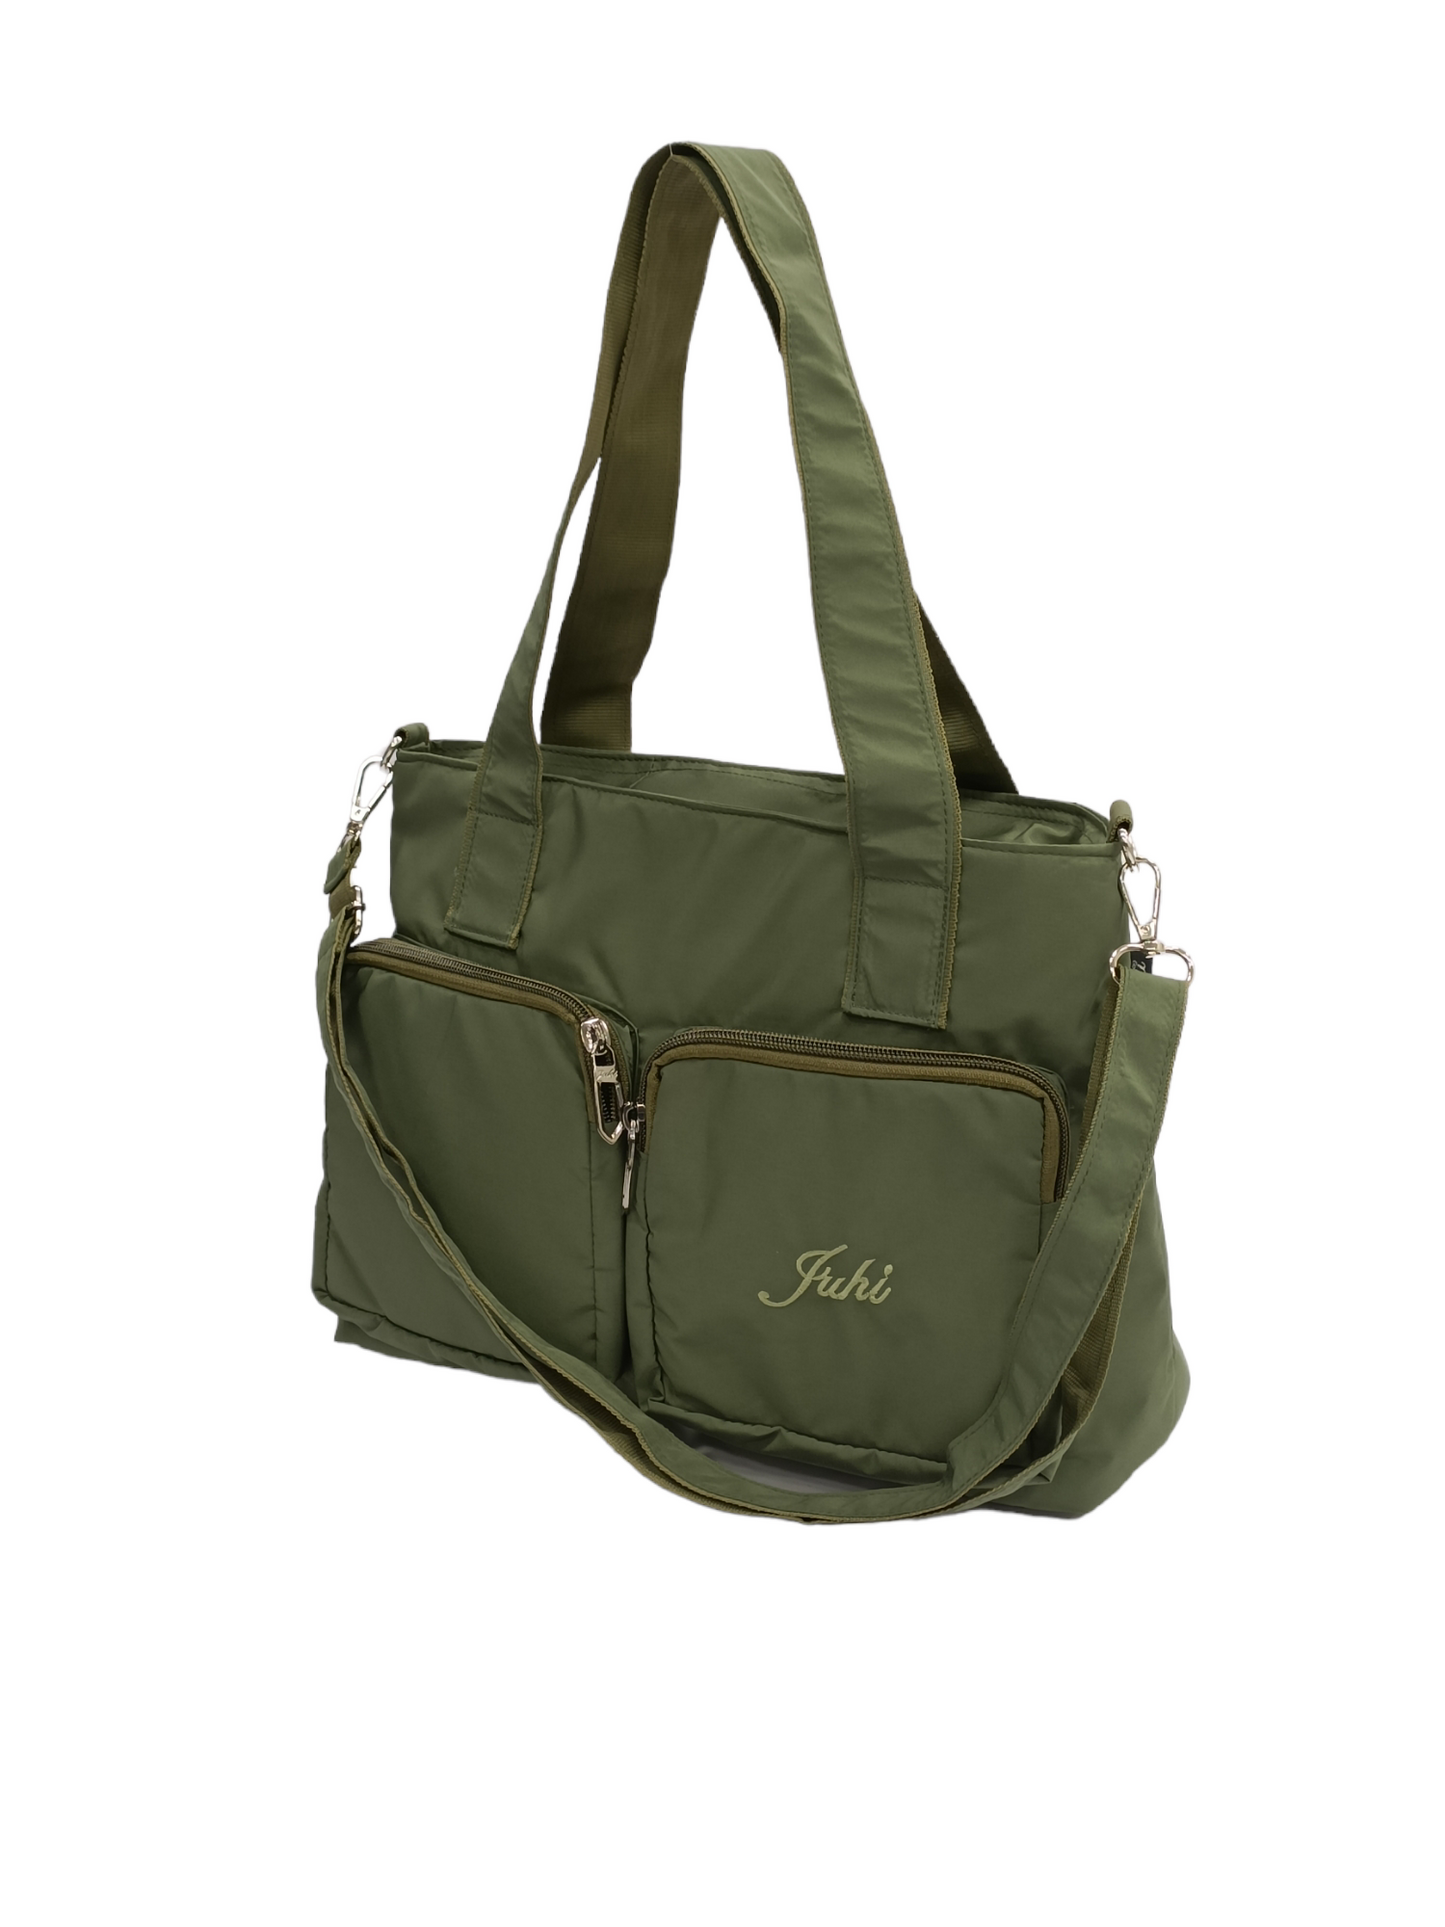 Abc's 6 pocket small size handbag with sling belt